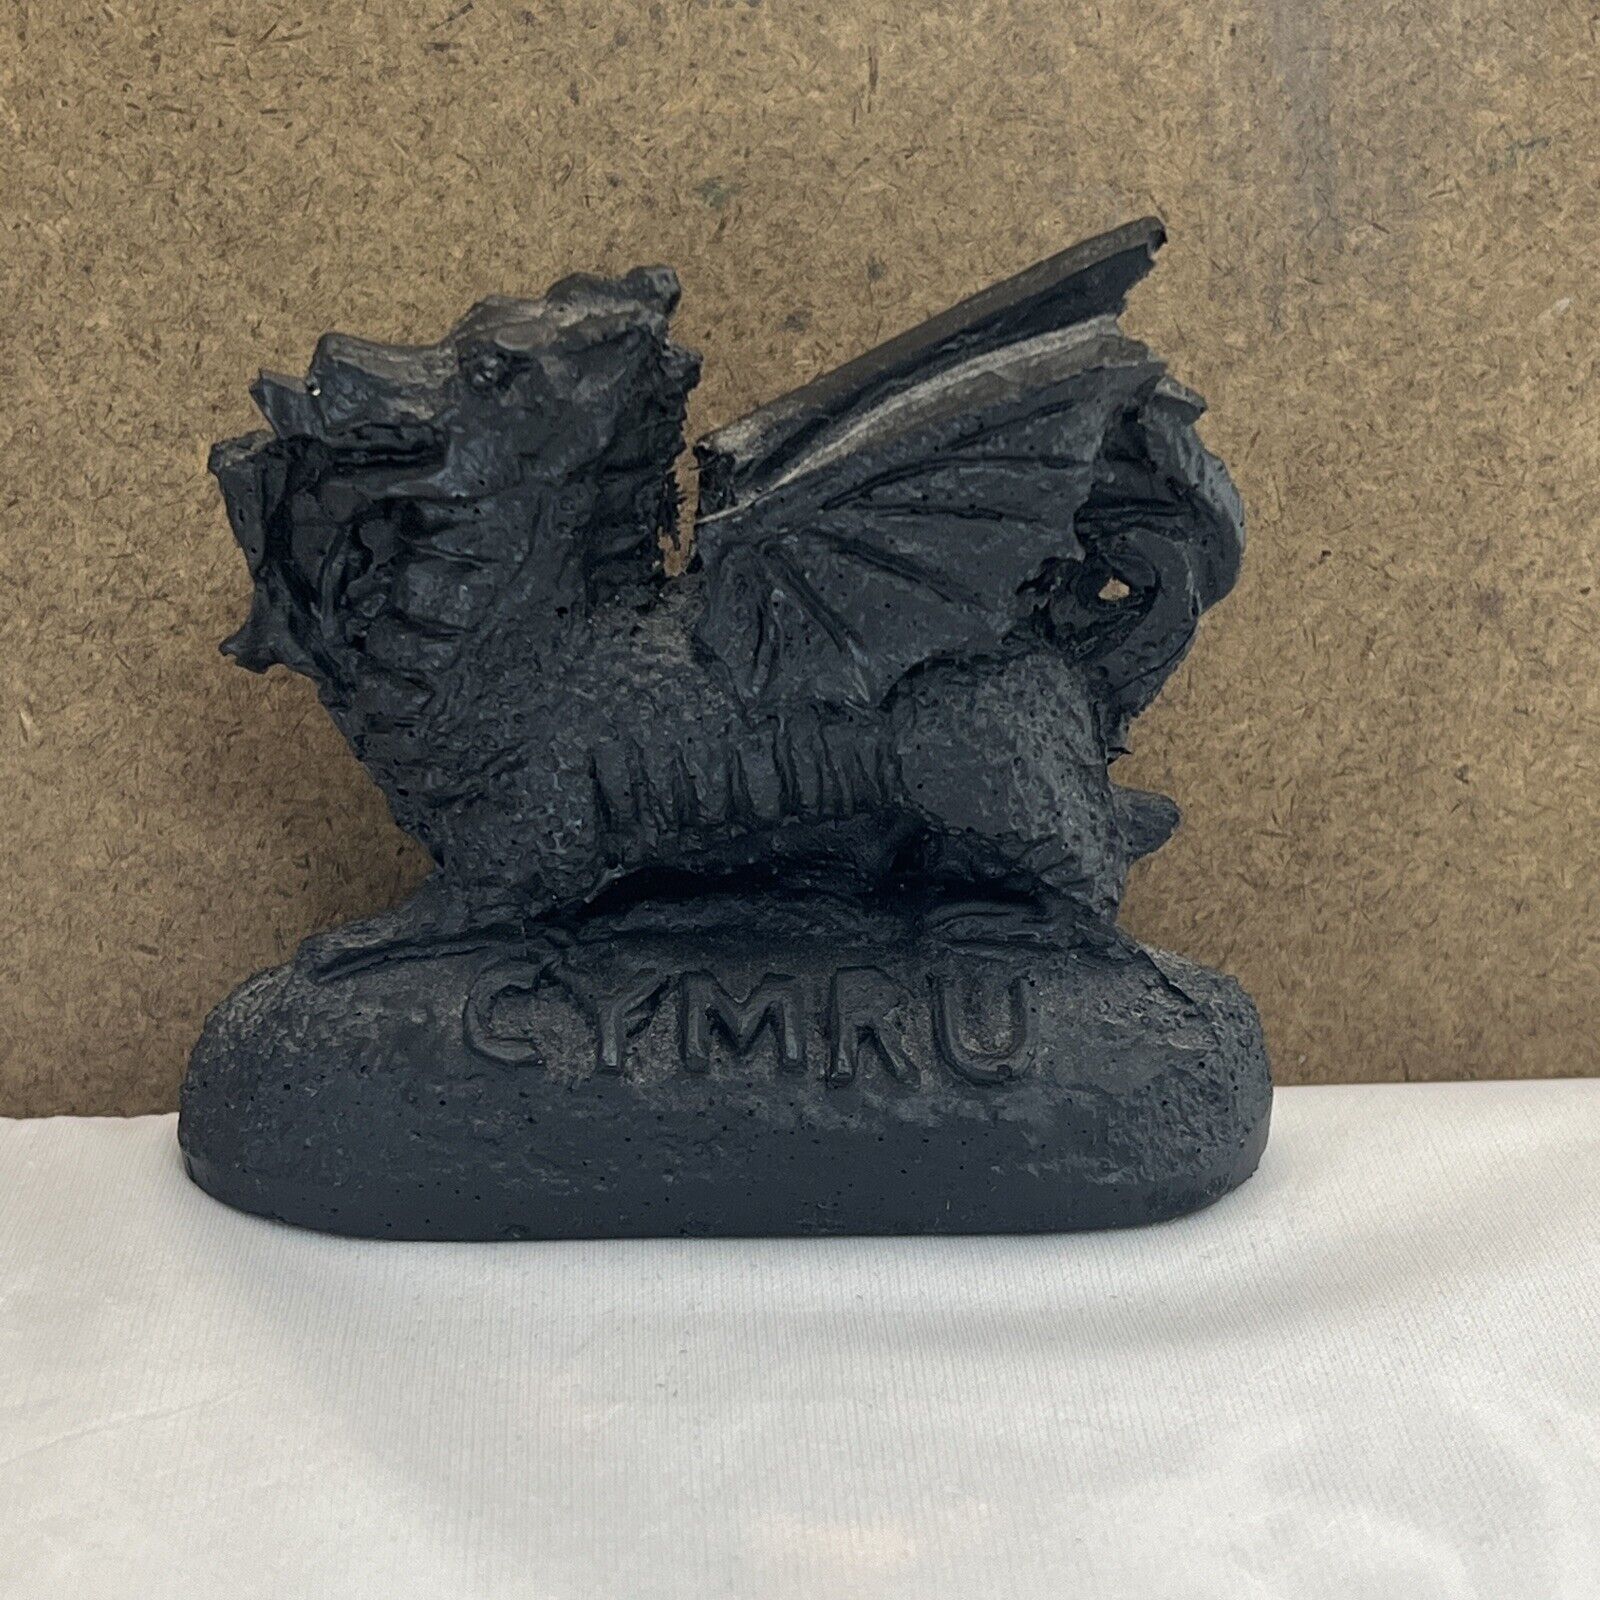 Vtg Kingmaker Hand Carved Tower Coal Dragon Statue Small Cymru Wales Welsh